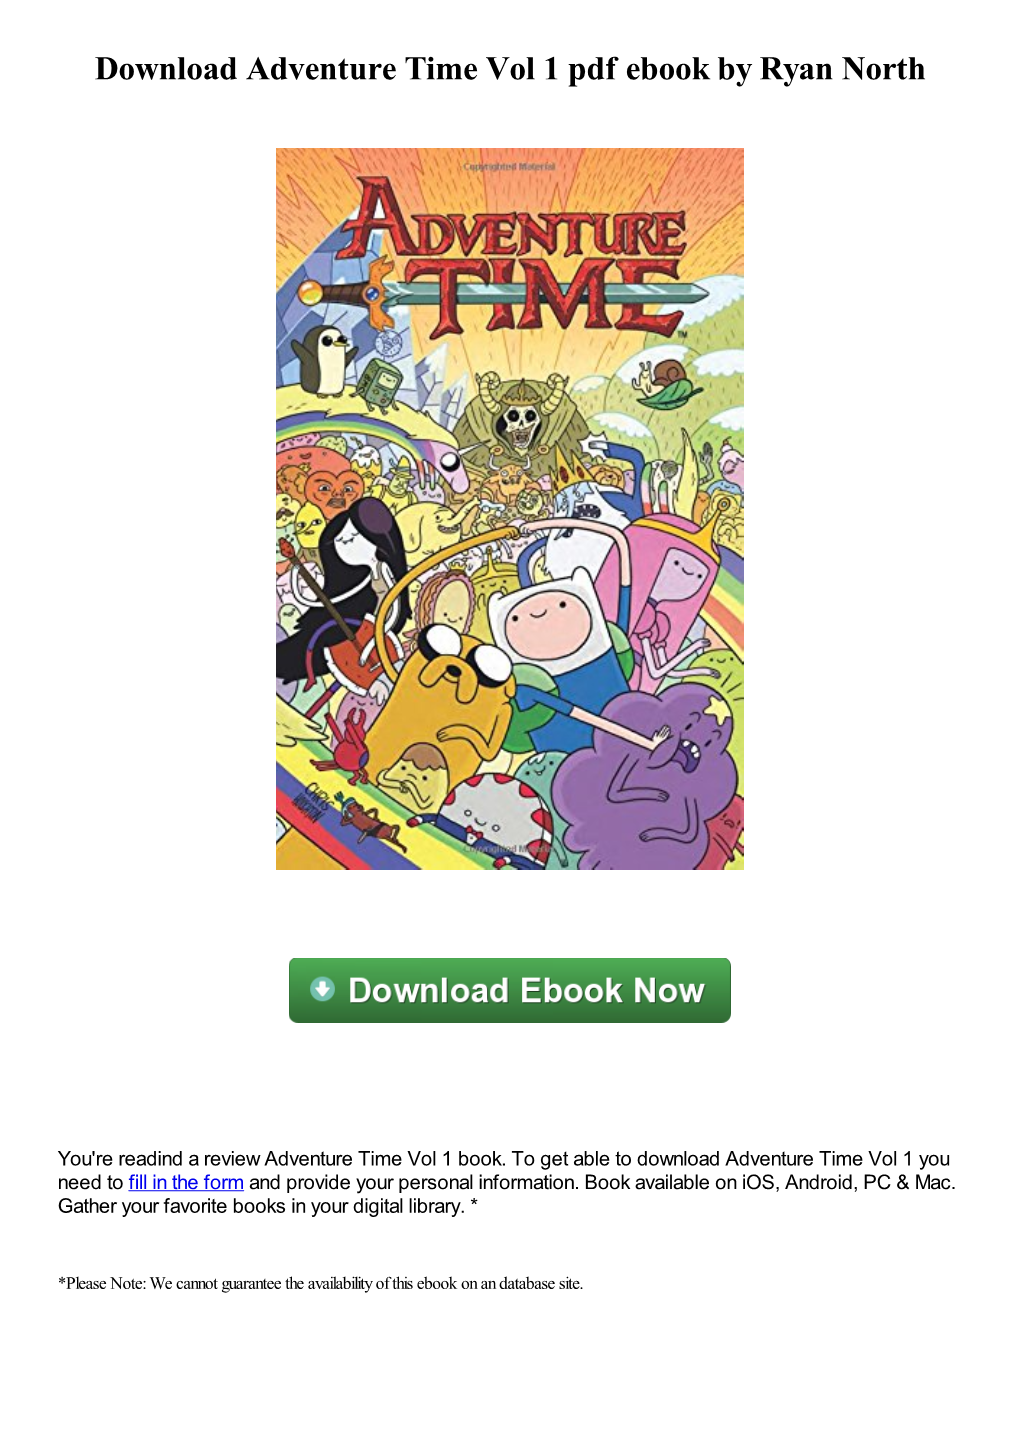 Download Adventure Time Vol 1 Pdf Ebook by Ryan North